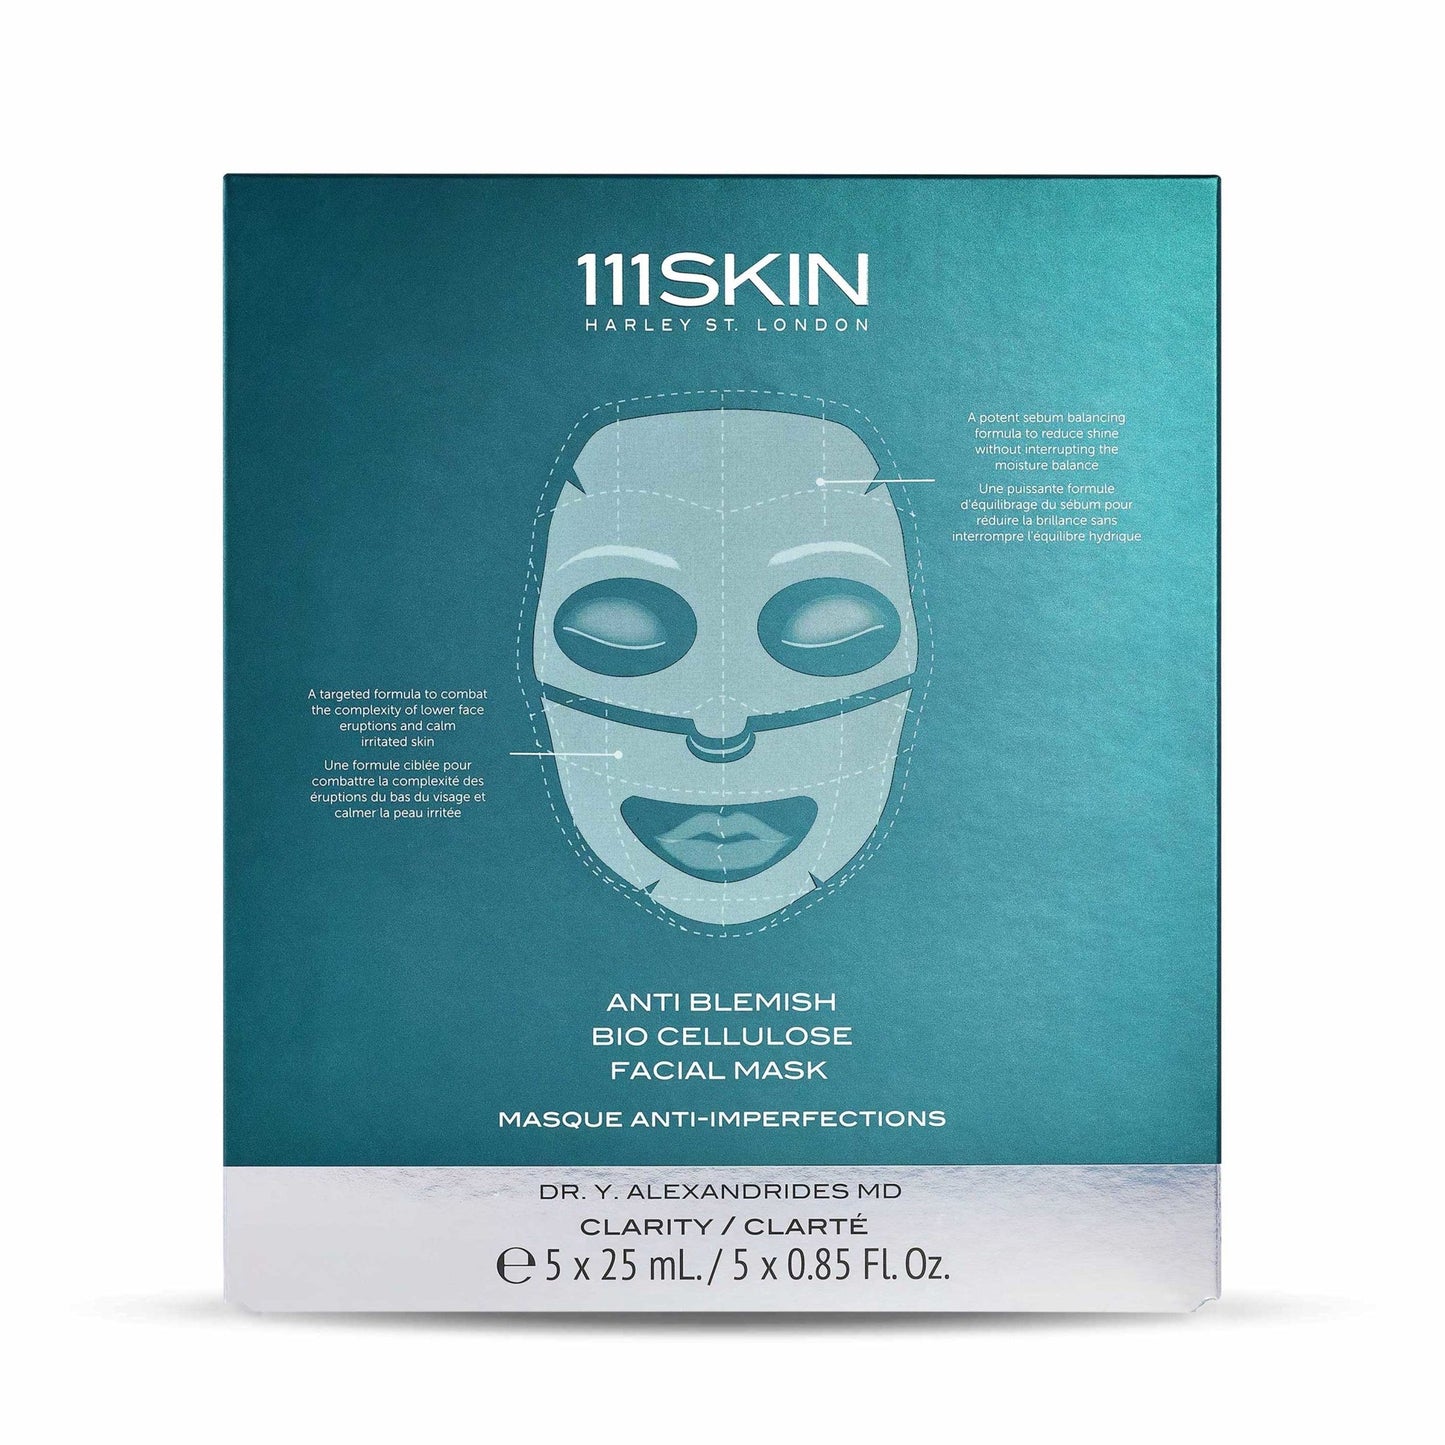 Anti Blemish Bio Cellulose Facial Mask - 111SKIN